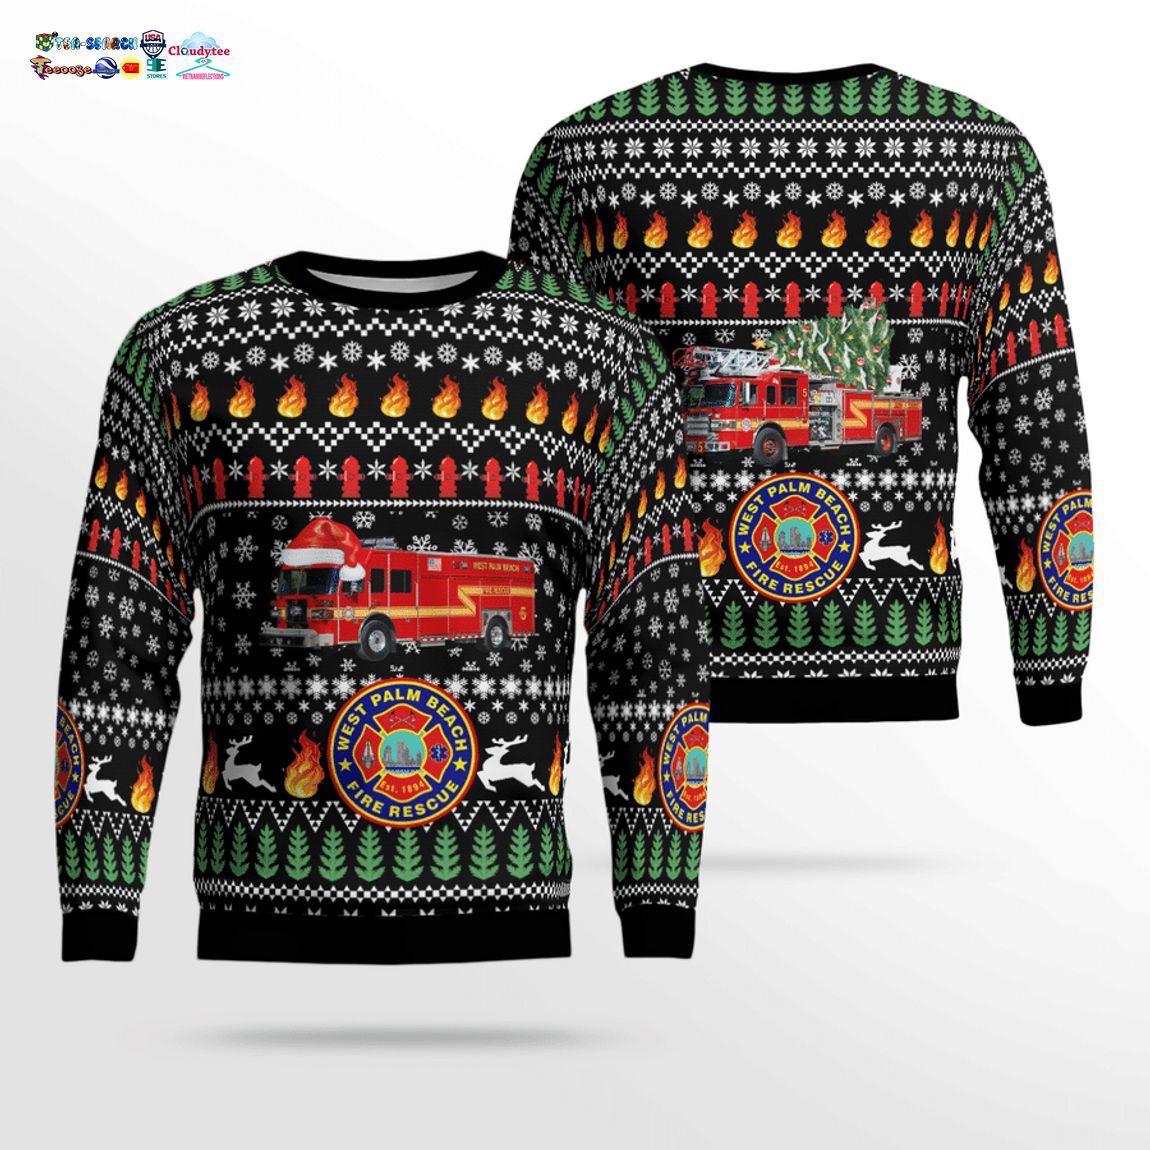 Florida West Palm Beach Fire Department 3D Christmas Sweater - Cool look bro